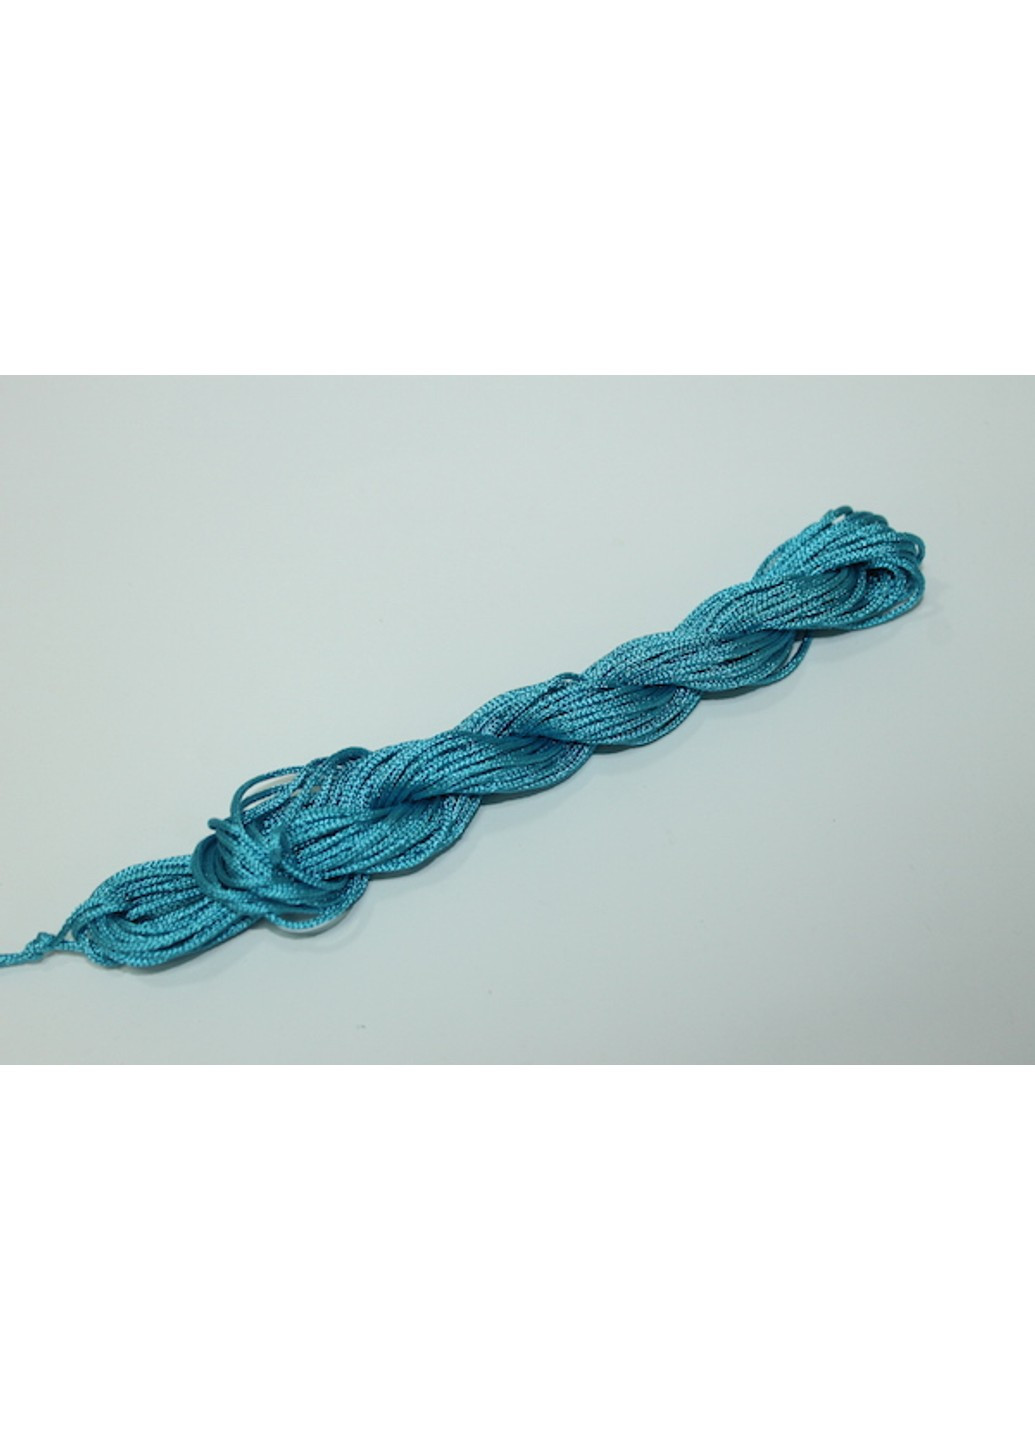 Мотузка біжутерна синтетична для Шамбали 11-13м/1.5мм FROM FACTORY (260744082)